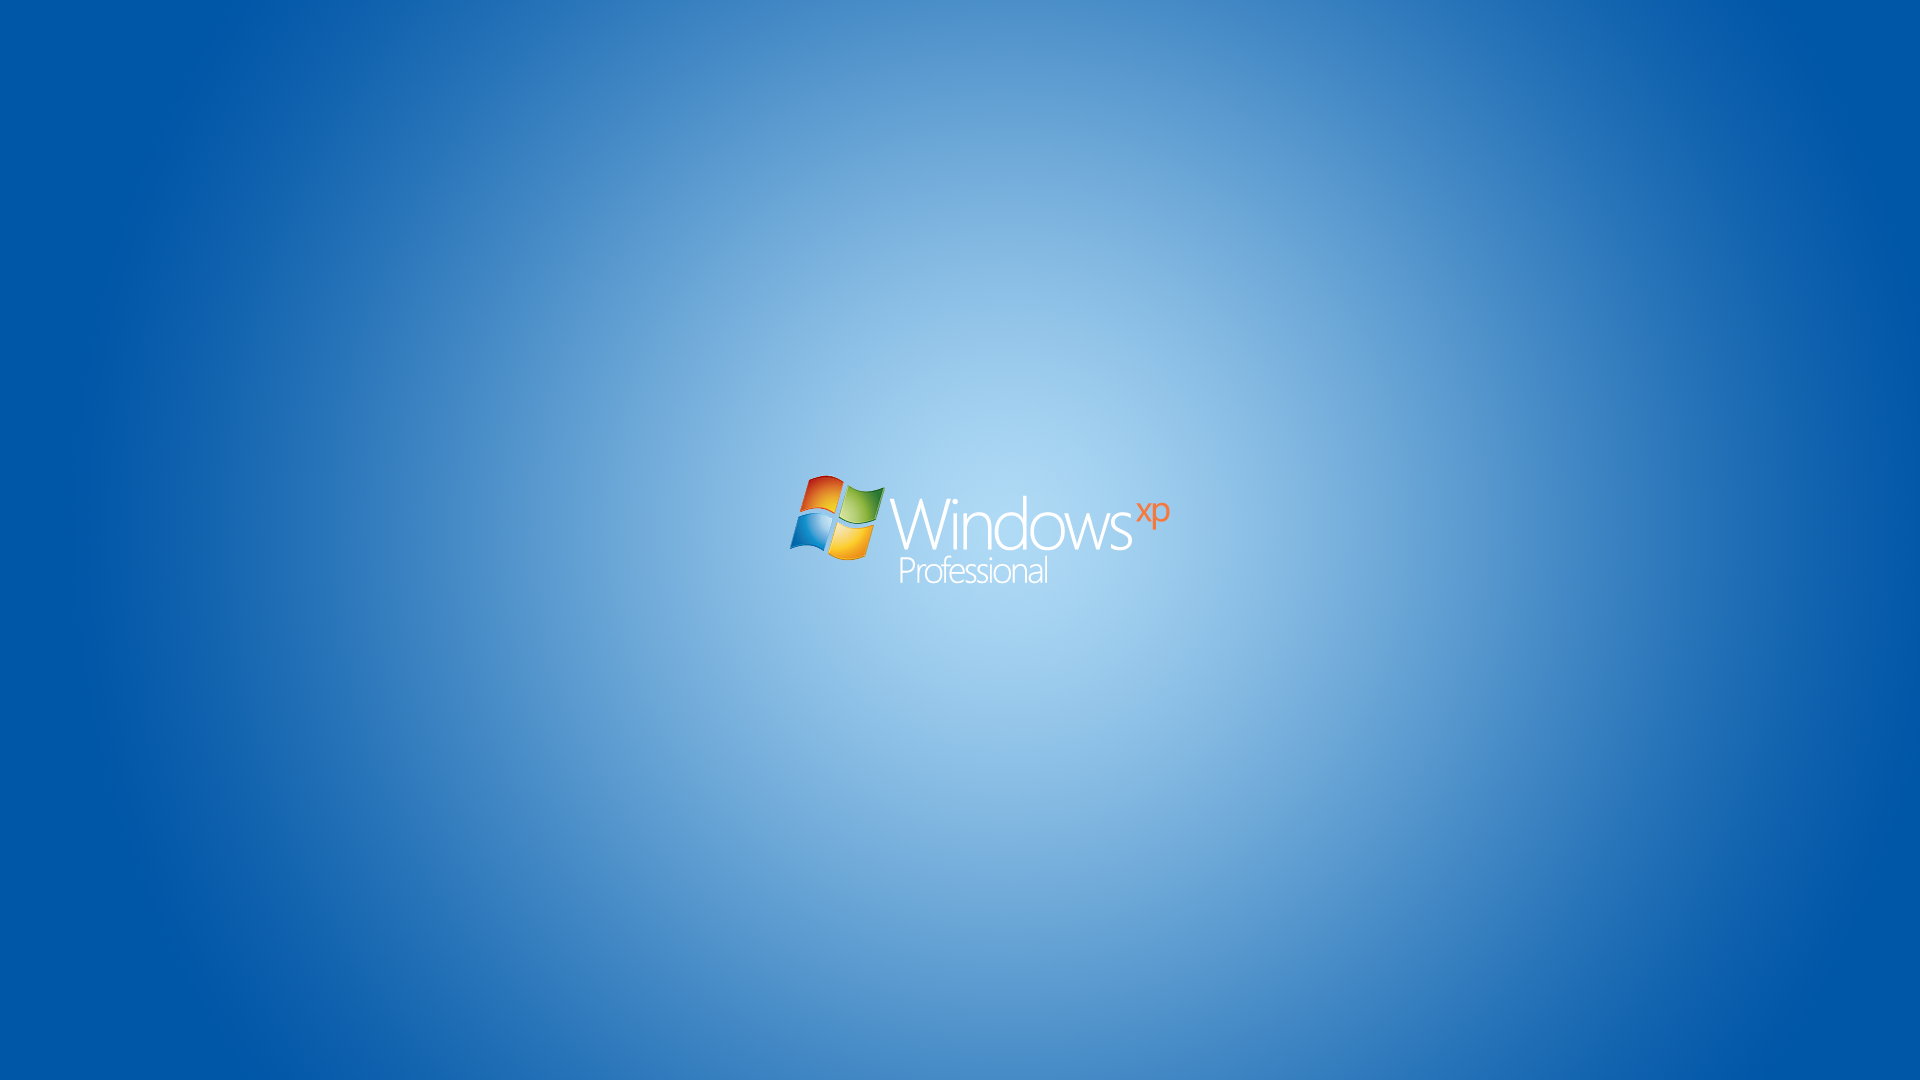 Windows Xp Professional Wallpaper By Scimiazzurro